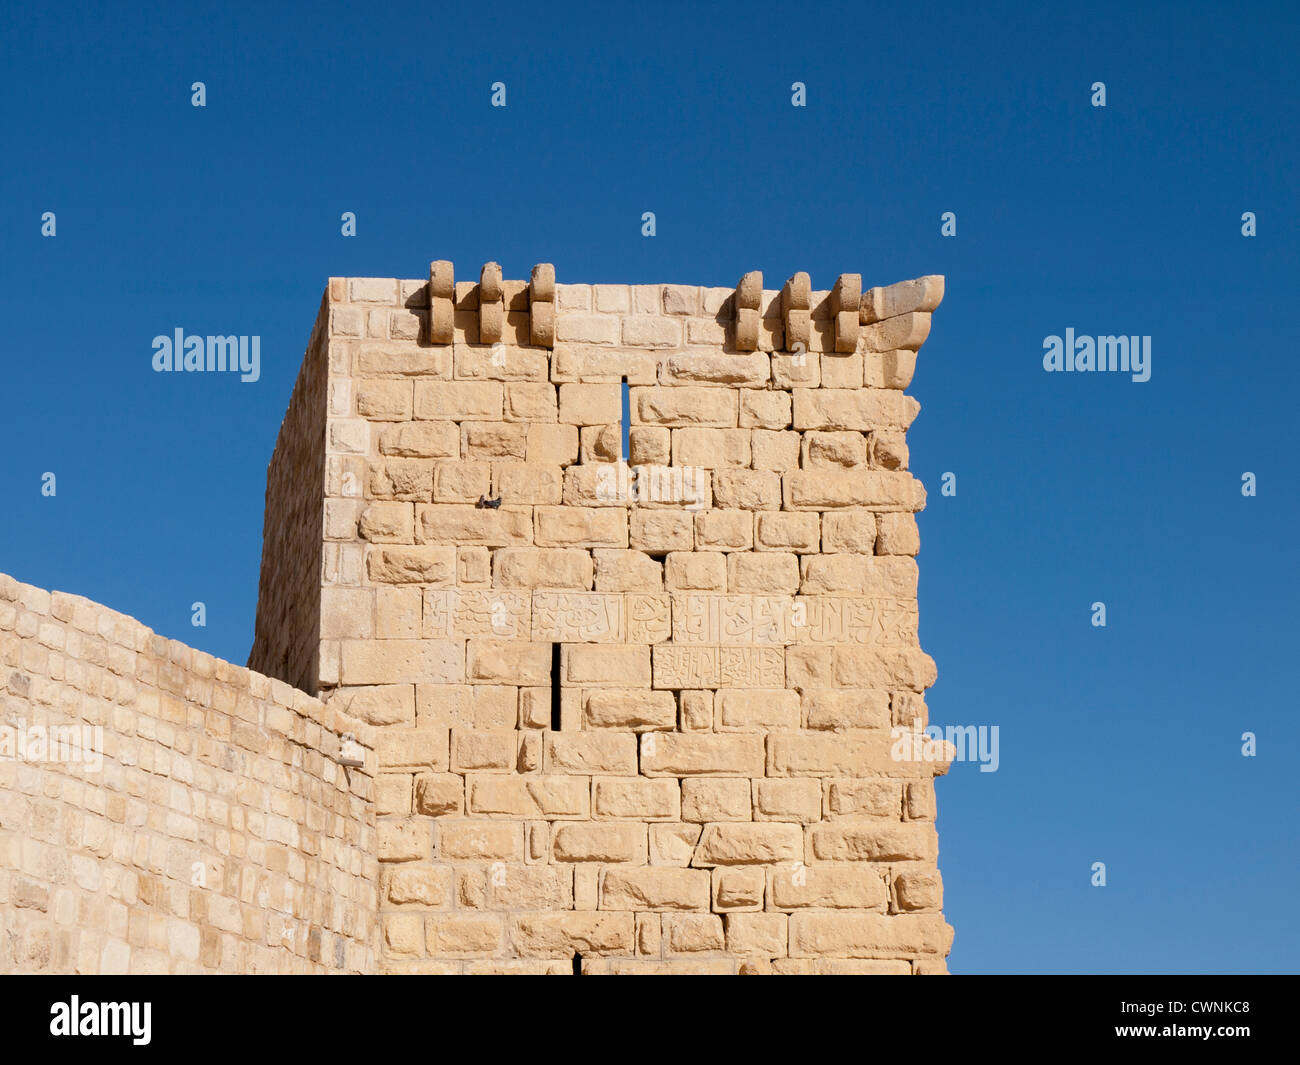 Crusader castle in Shoubak Jordan where Baldwin I reigned during part of the crusades Stock Photo